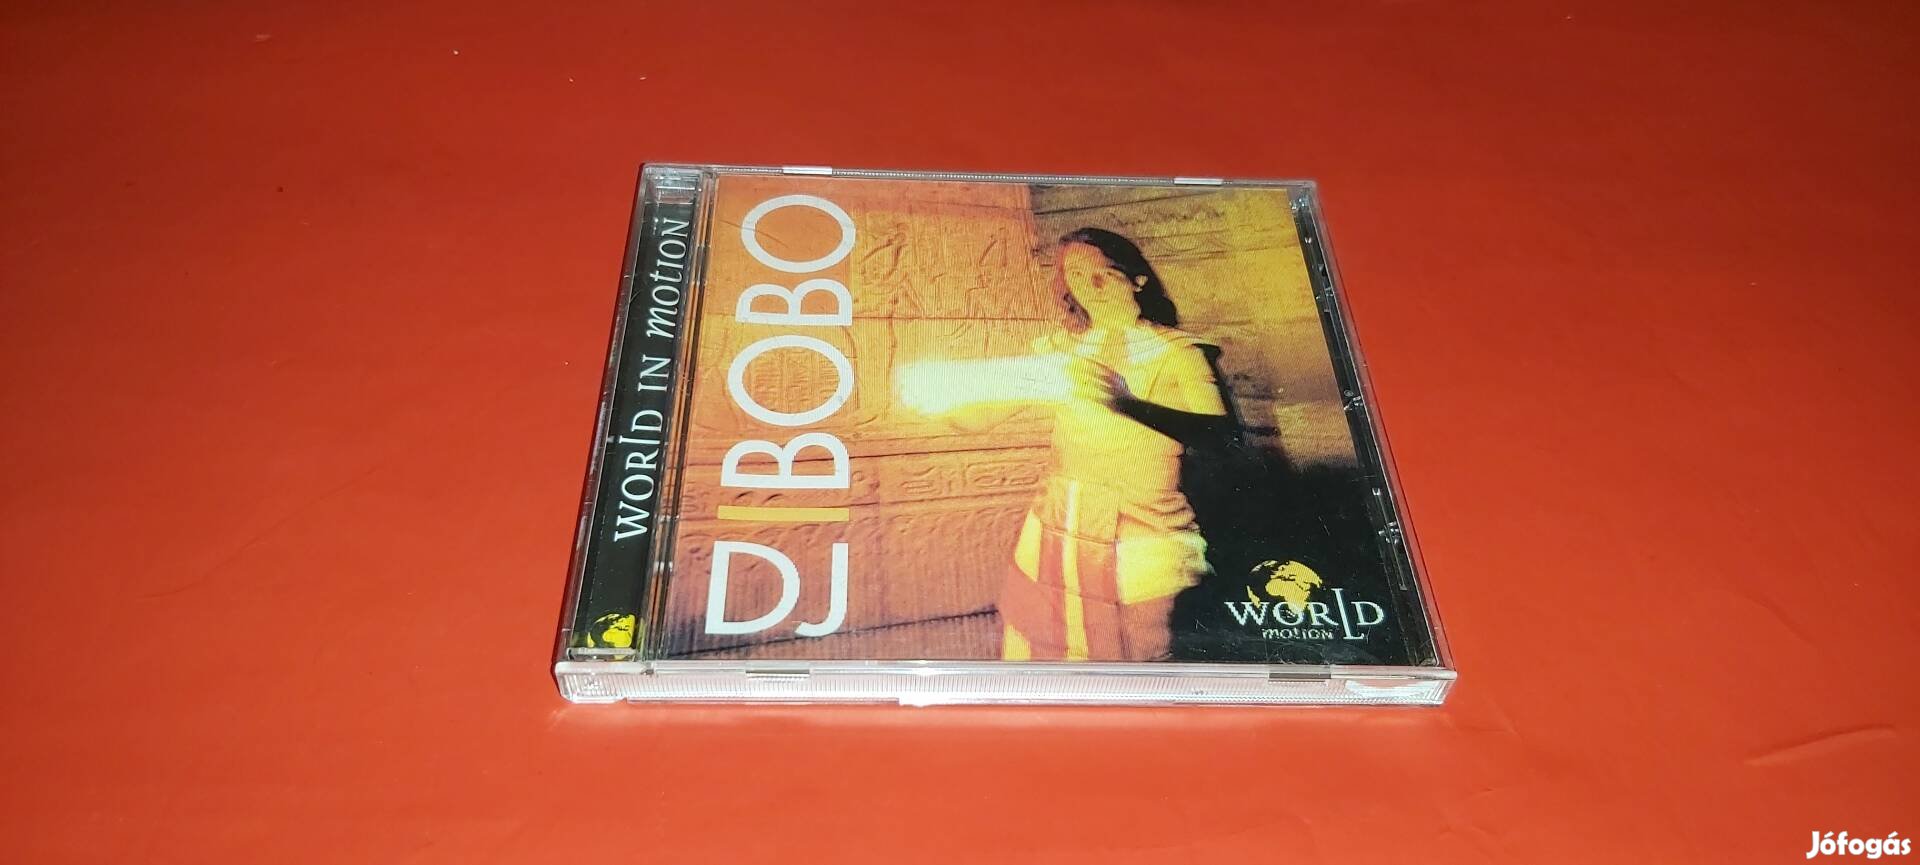 Dj Bobo World in motion Cd 1996